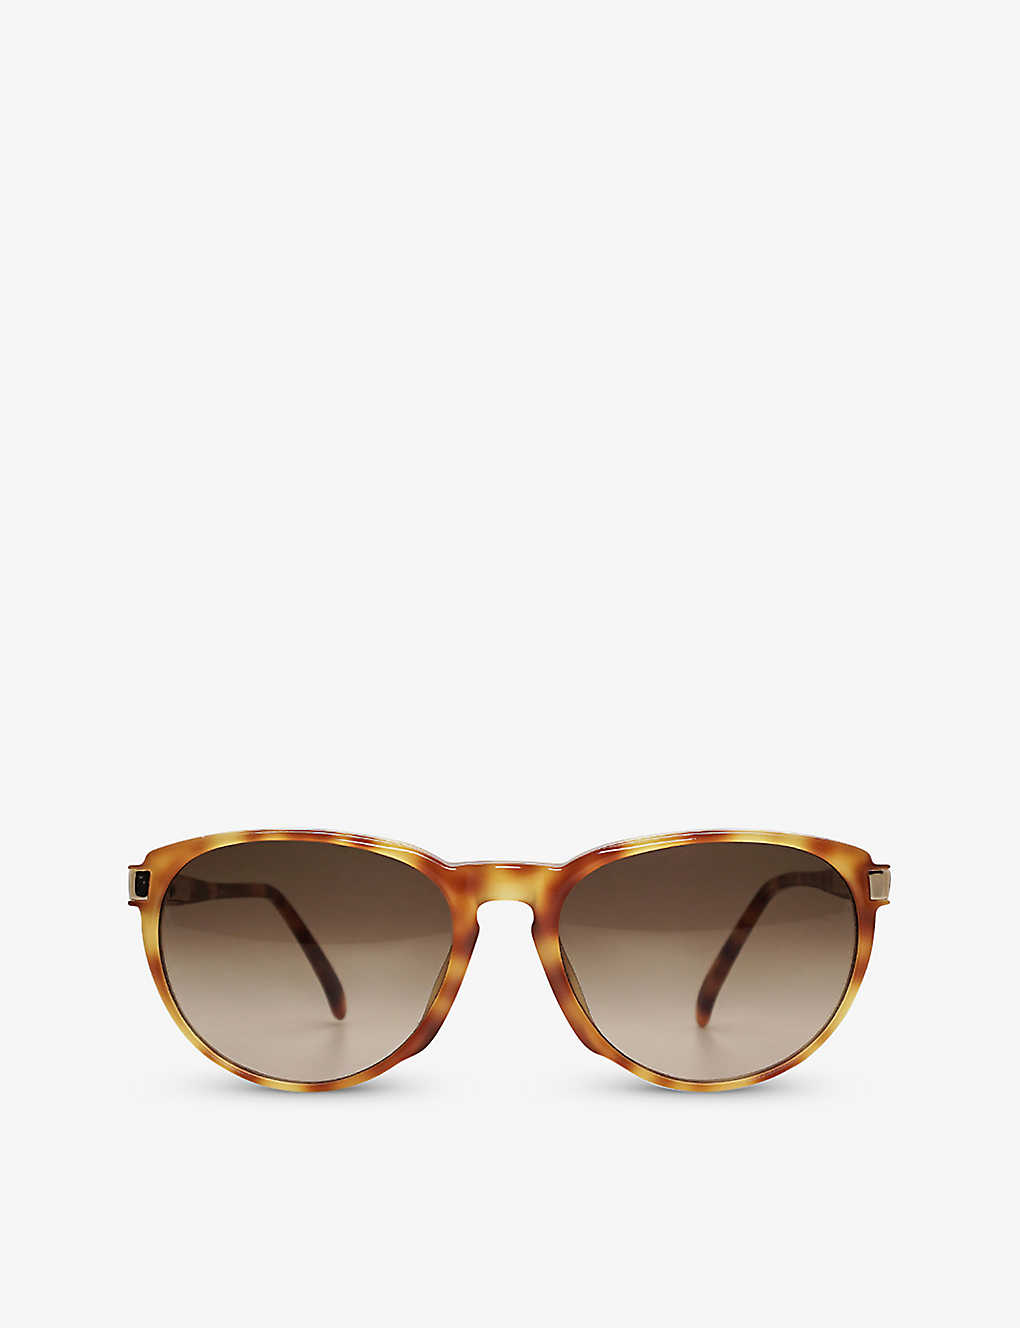 The Vintage Trap Womens Tortoise Shell Pre-loved Gucci 80s Tortoiseshell Round-frame Sunglasses